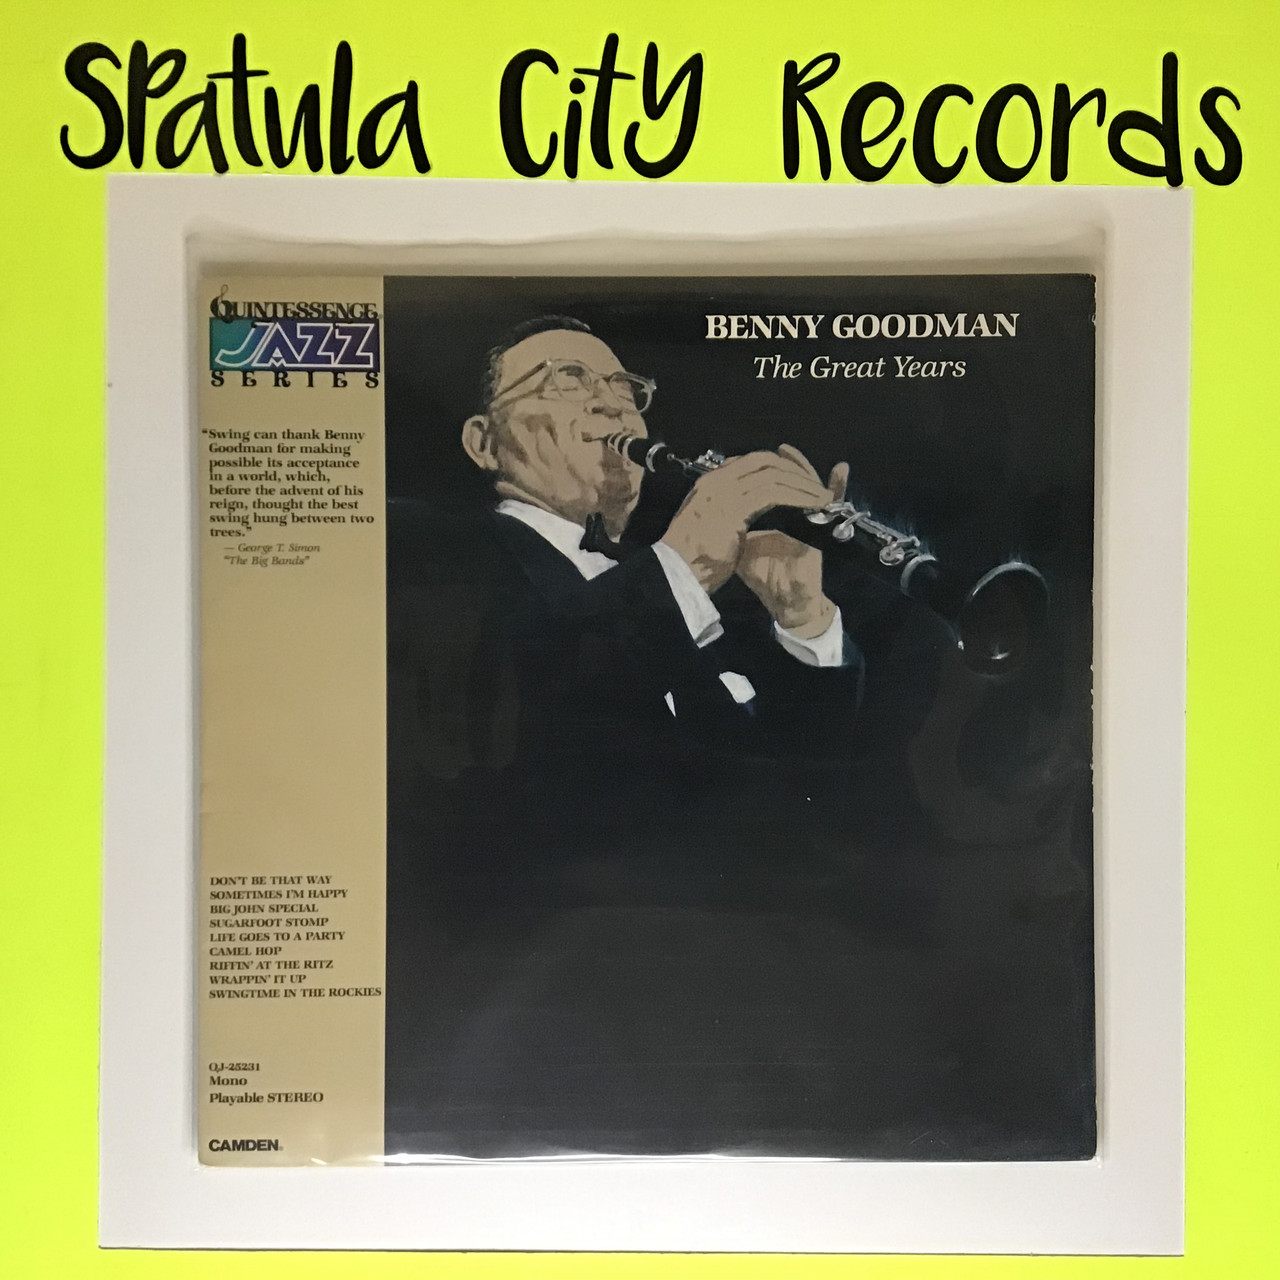 Benny Goodman - The Great Years - MONO - vinyl record album LP